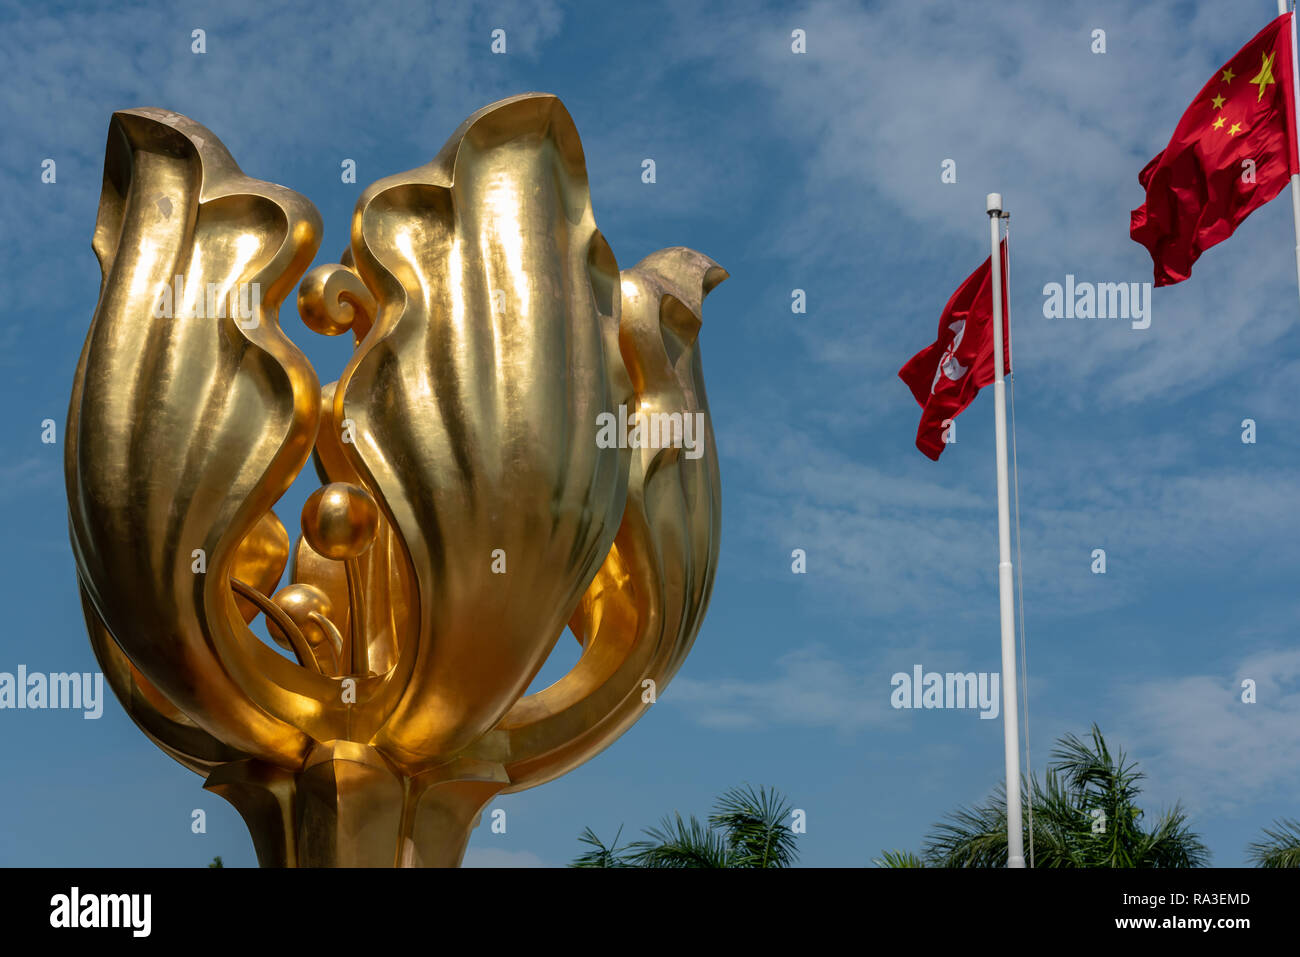 "Forever Blooming la escultura de la Bauhinia Dorada', que da nombre a la plaza Golden Bauhinia en Hong Kong en el Centro de Convenciones y Exposiciones Foto de stock